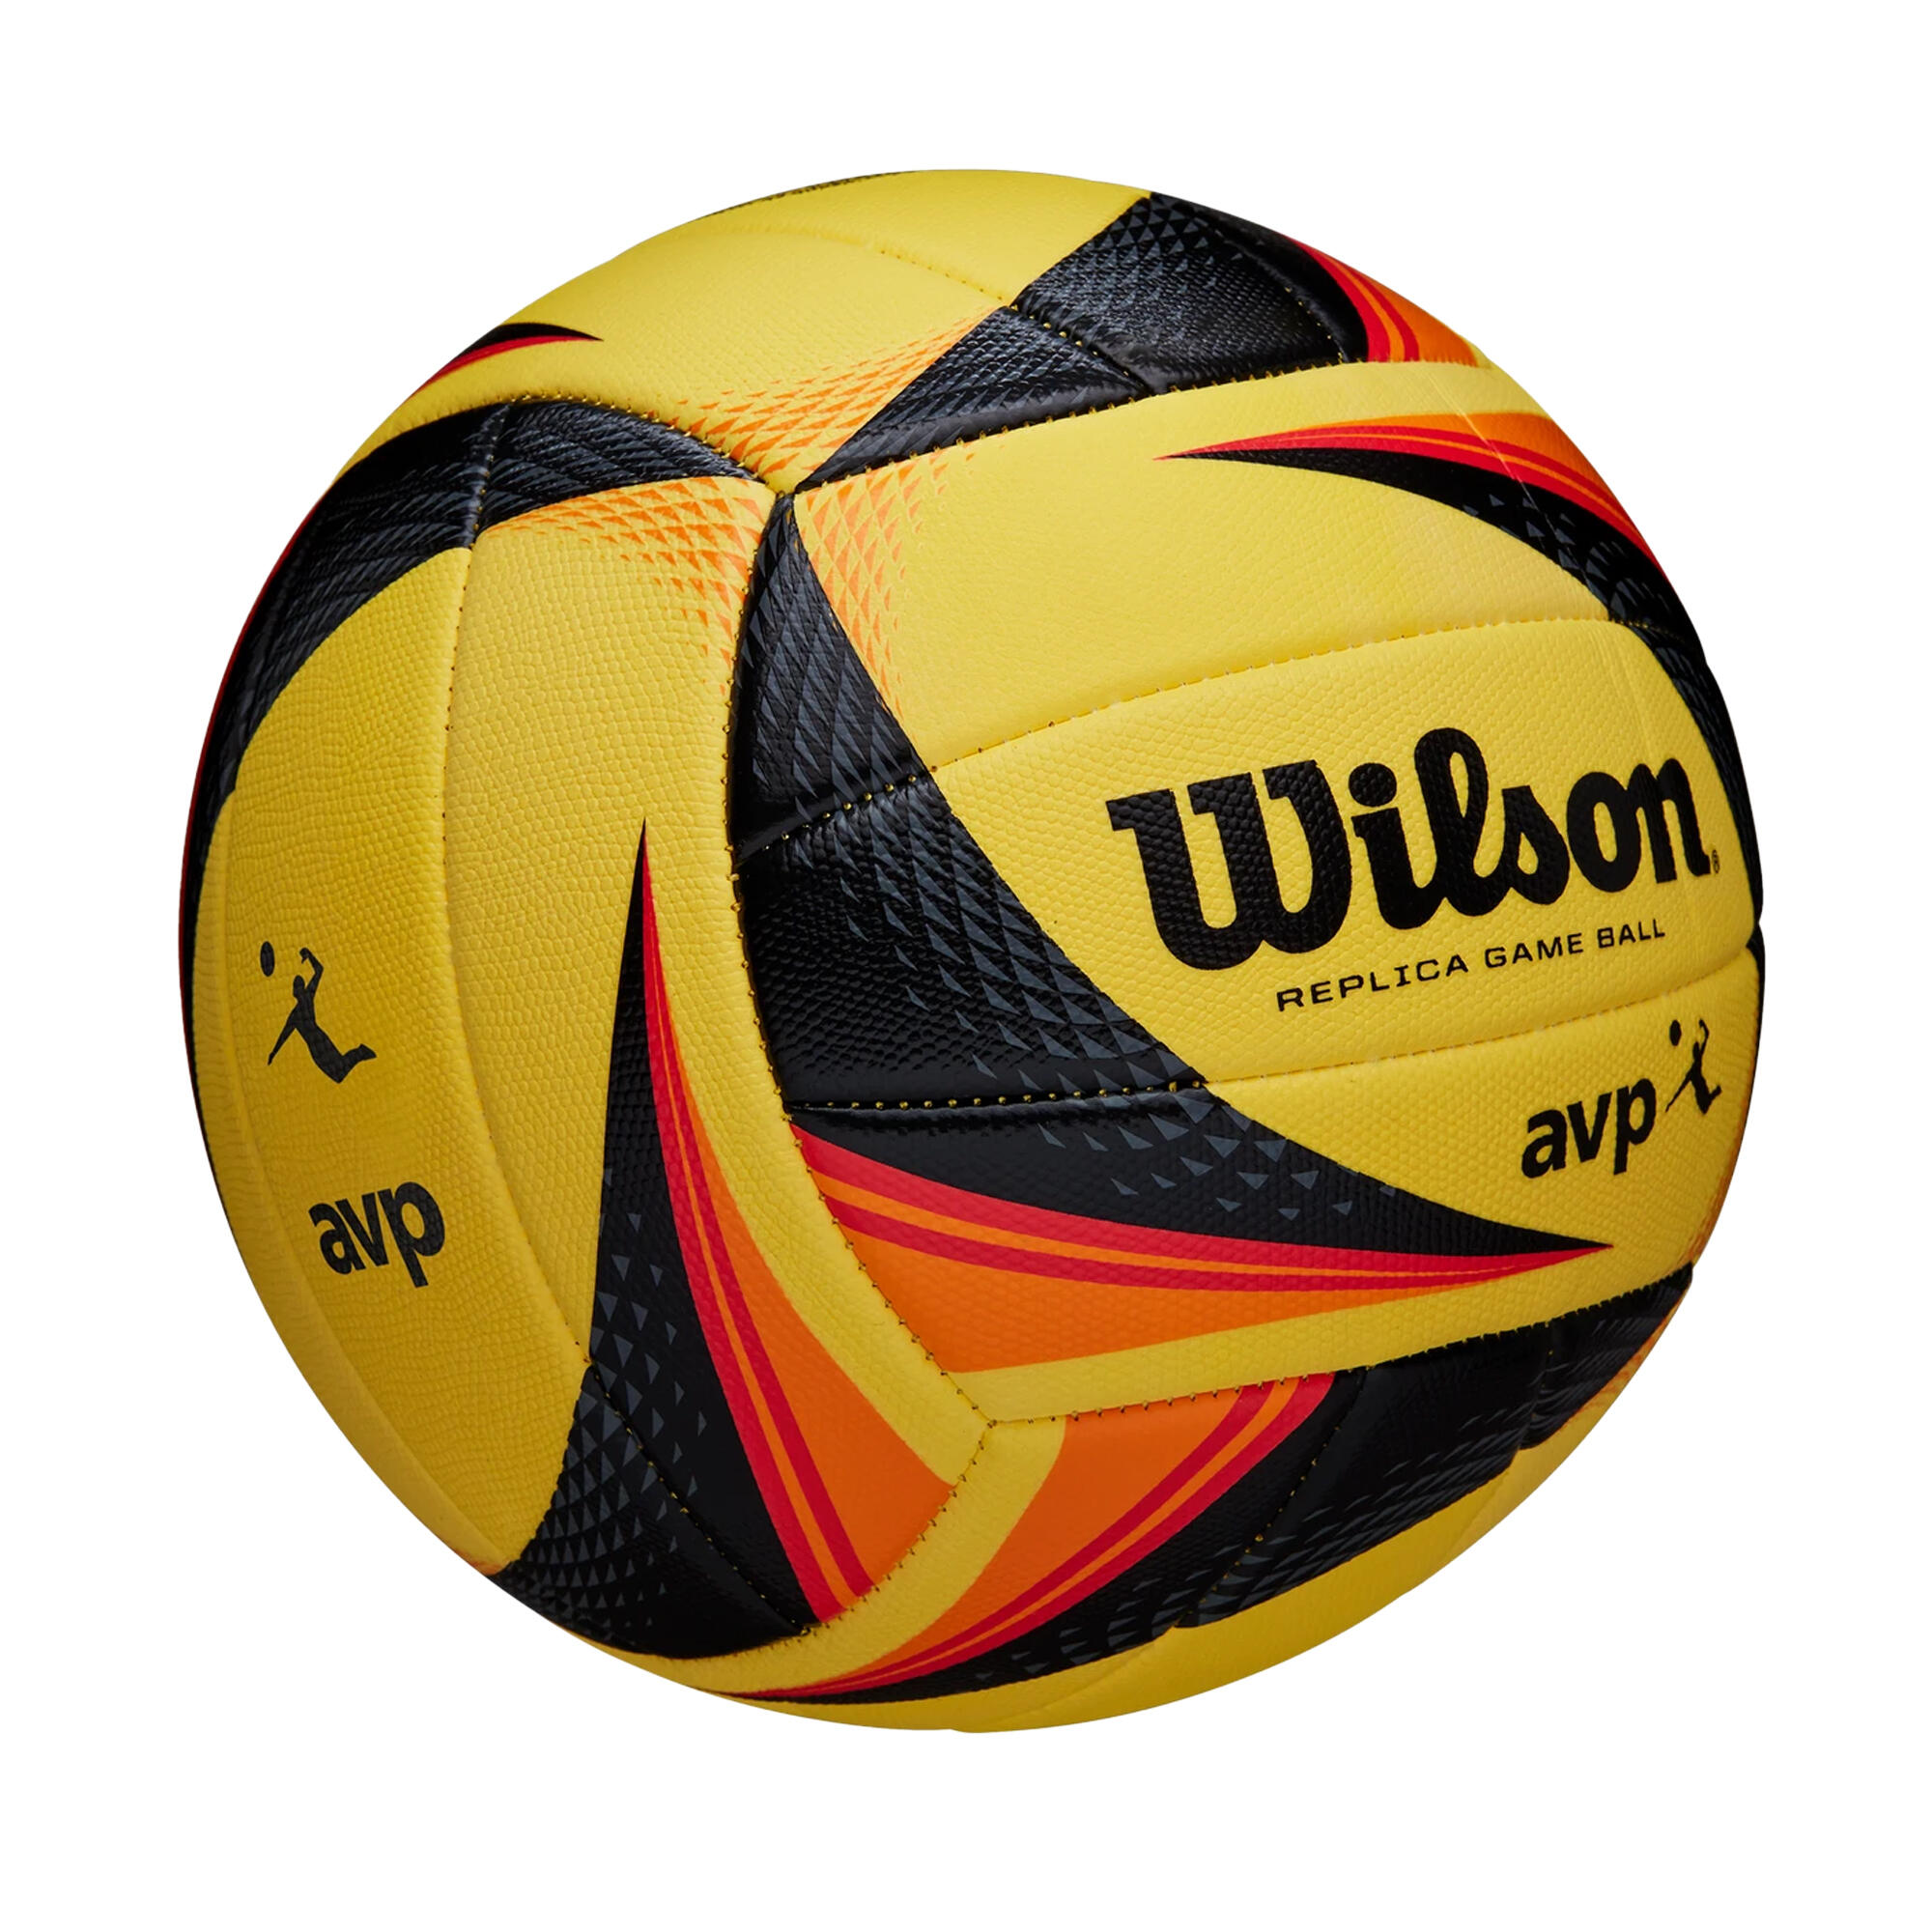 OPTX Replica AVP Volleyball (Yellow/Black/Red) 3/3